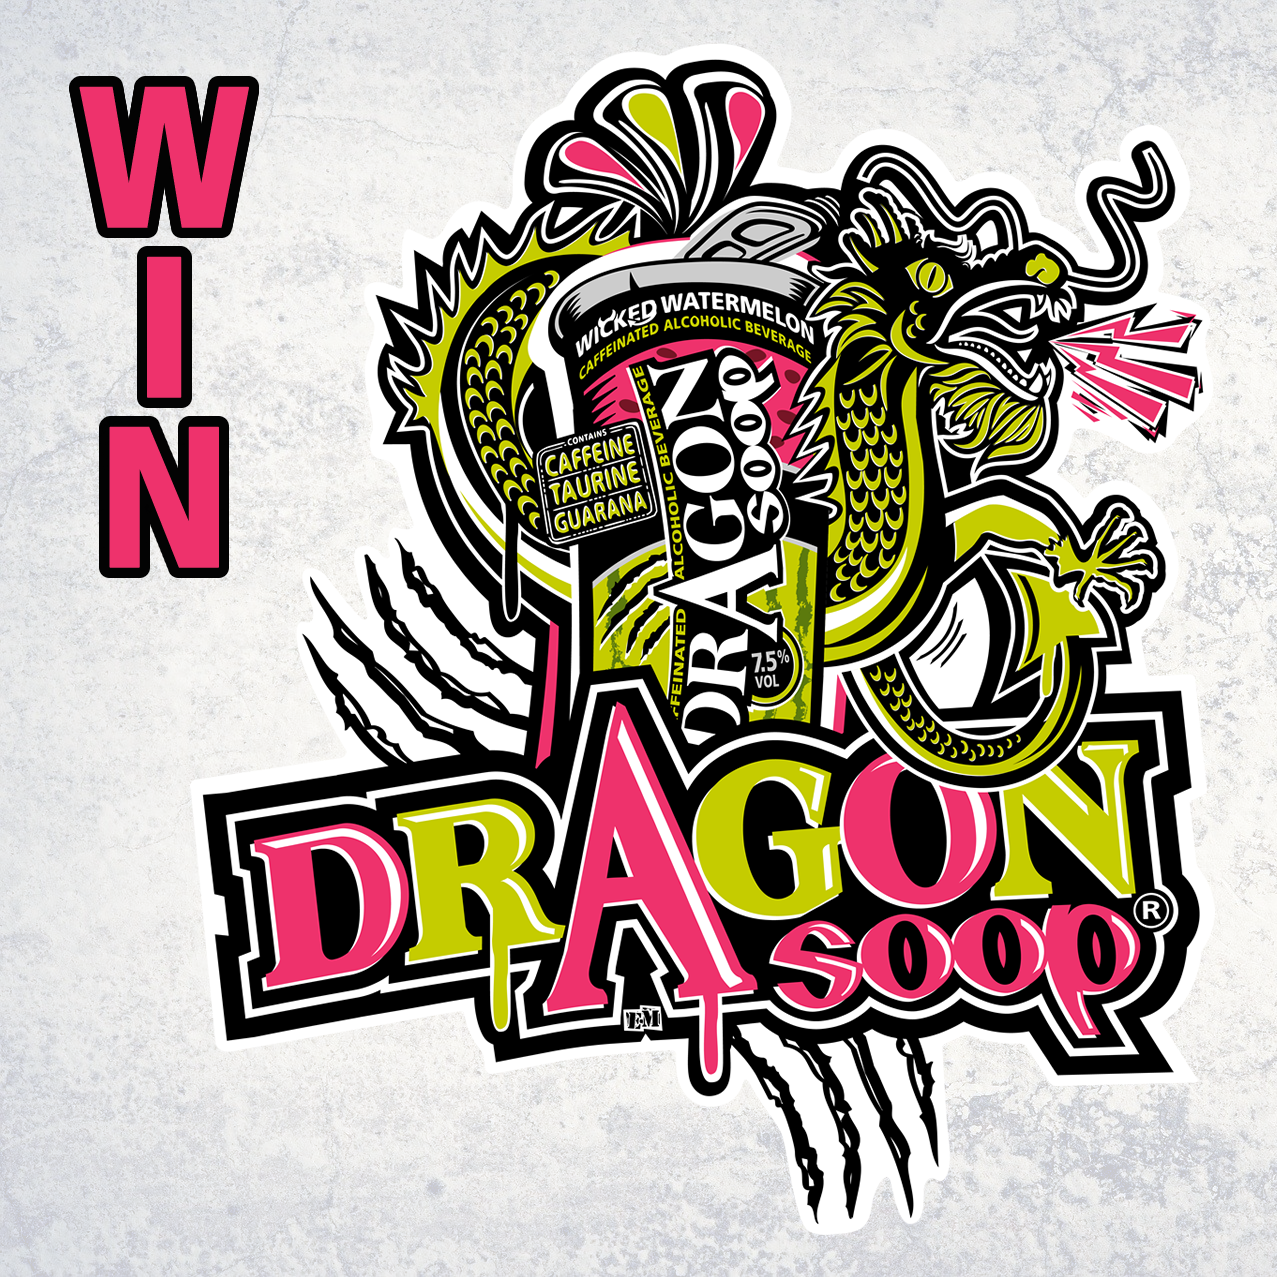 win-dragonsoop-wicked-watermelon.png